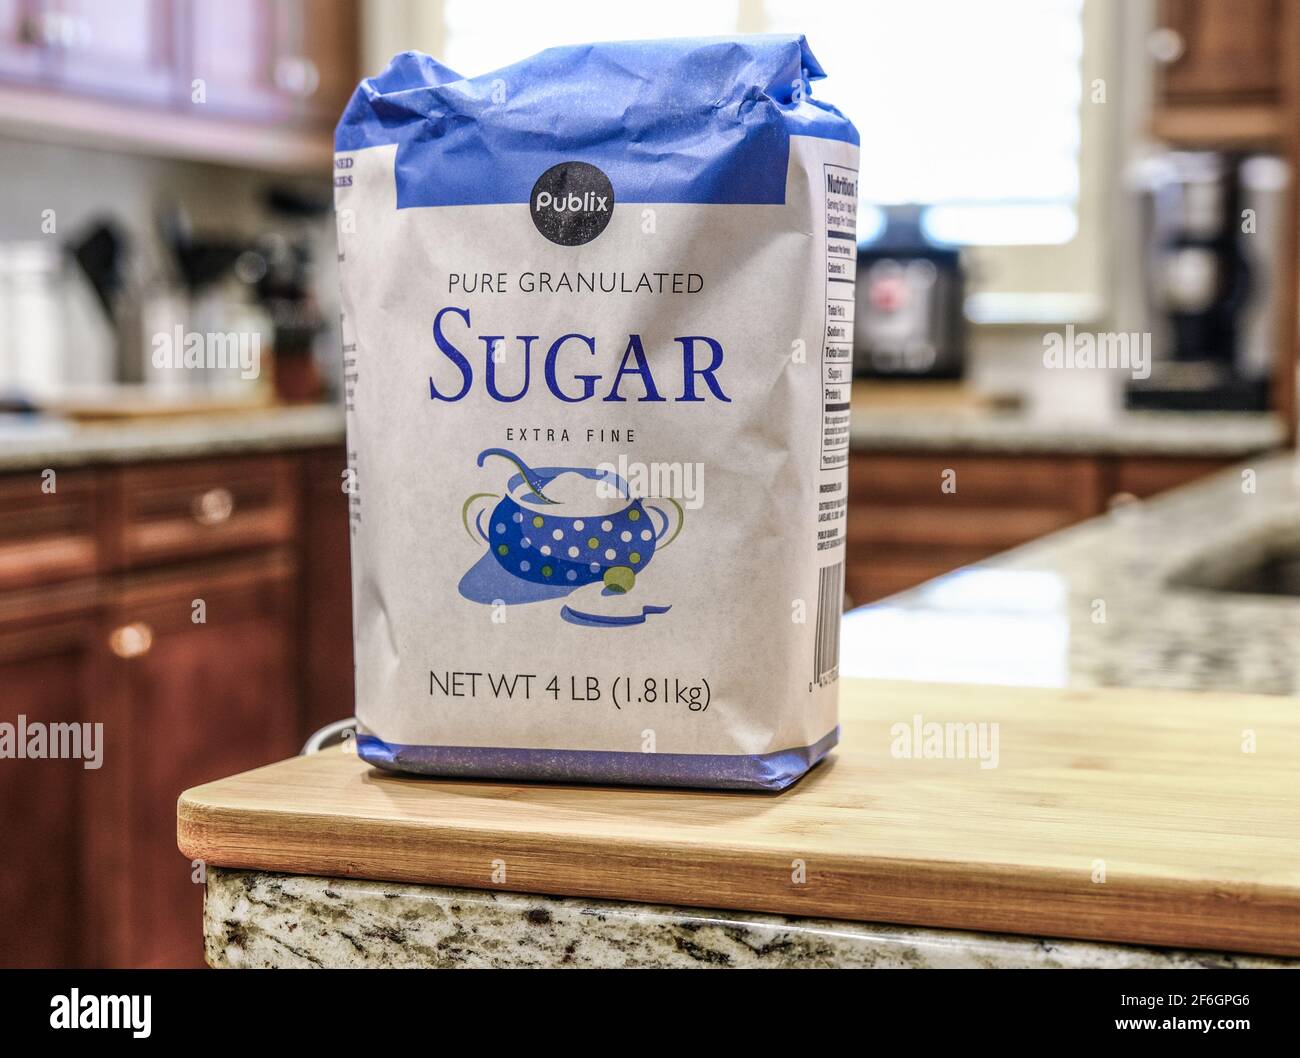 Bag of Publix Sugar Stock Photo